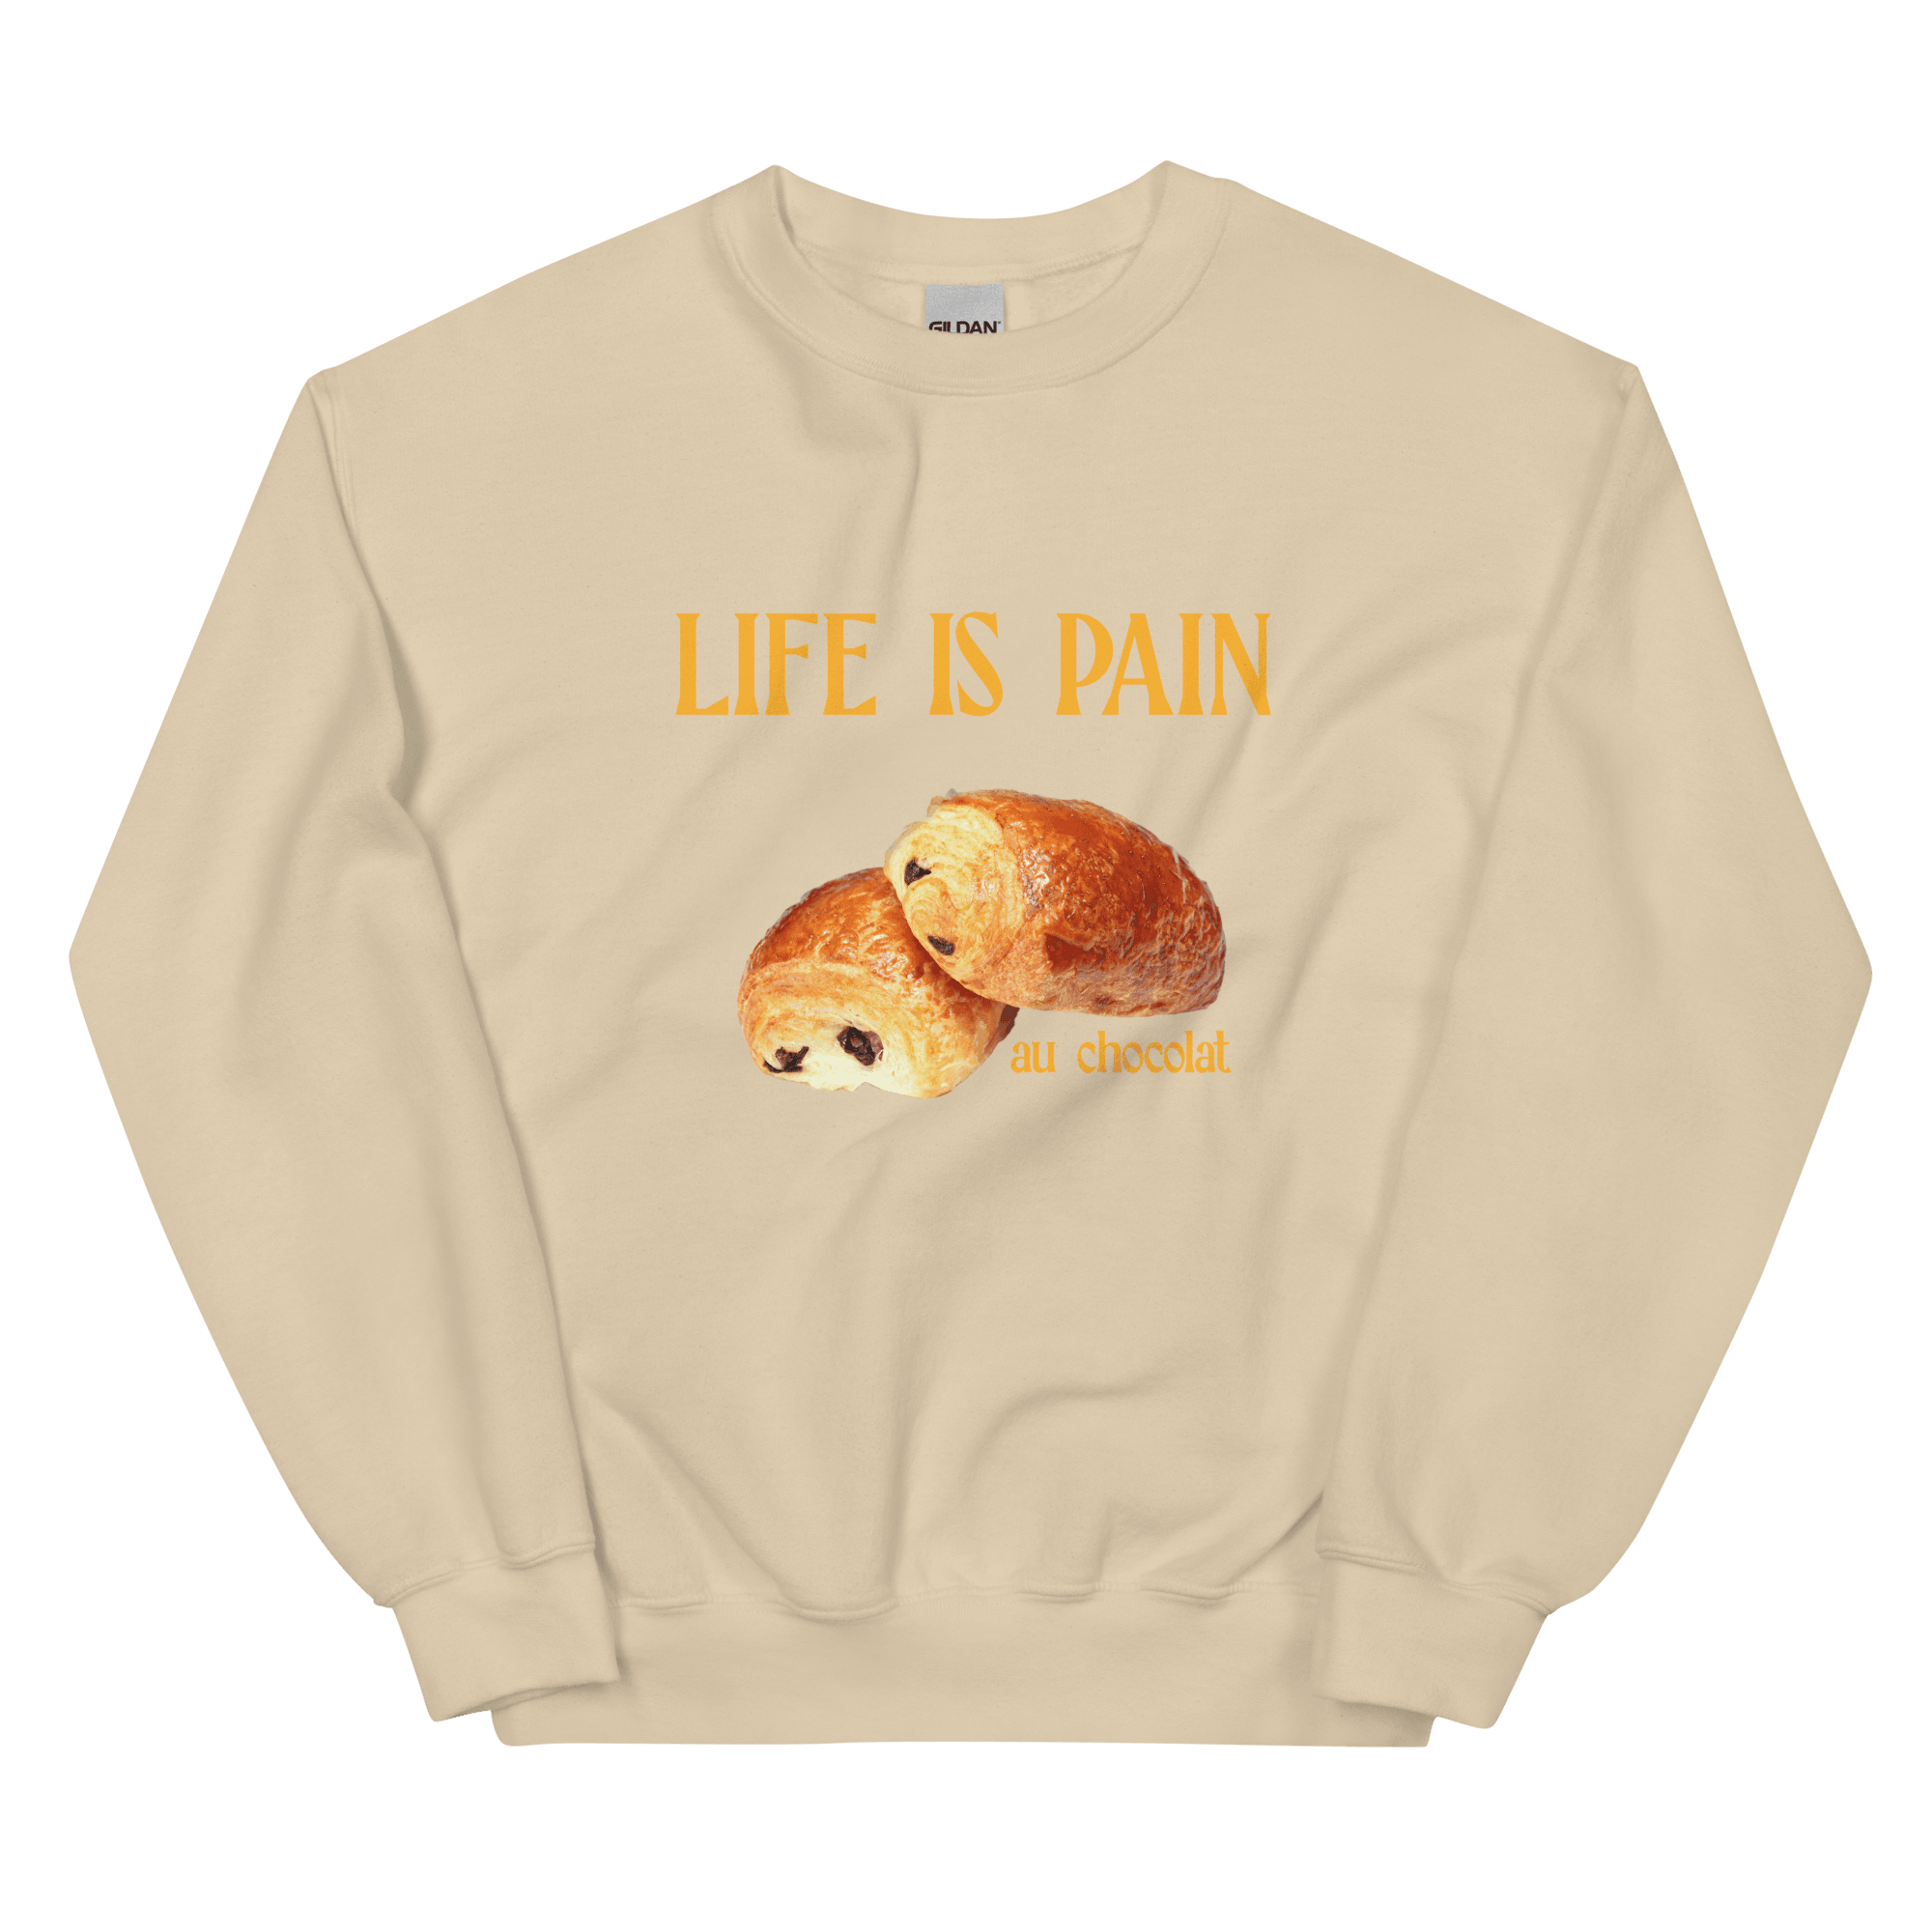 Life is Pain (au chocolat) Sweatshirt - Polychrome Goods 🍊